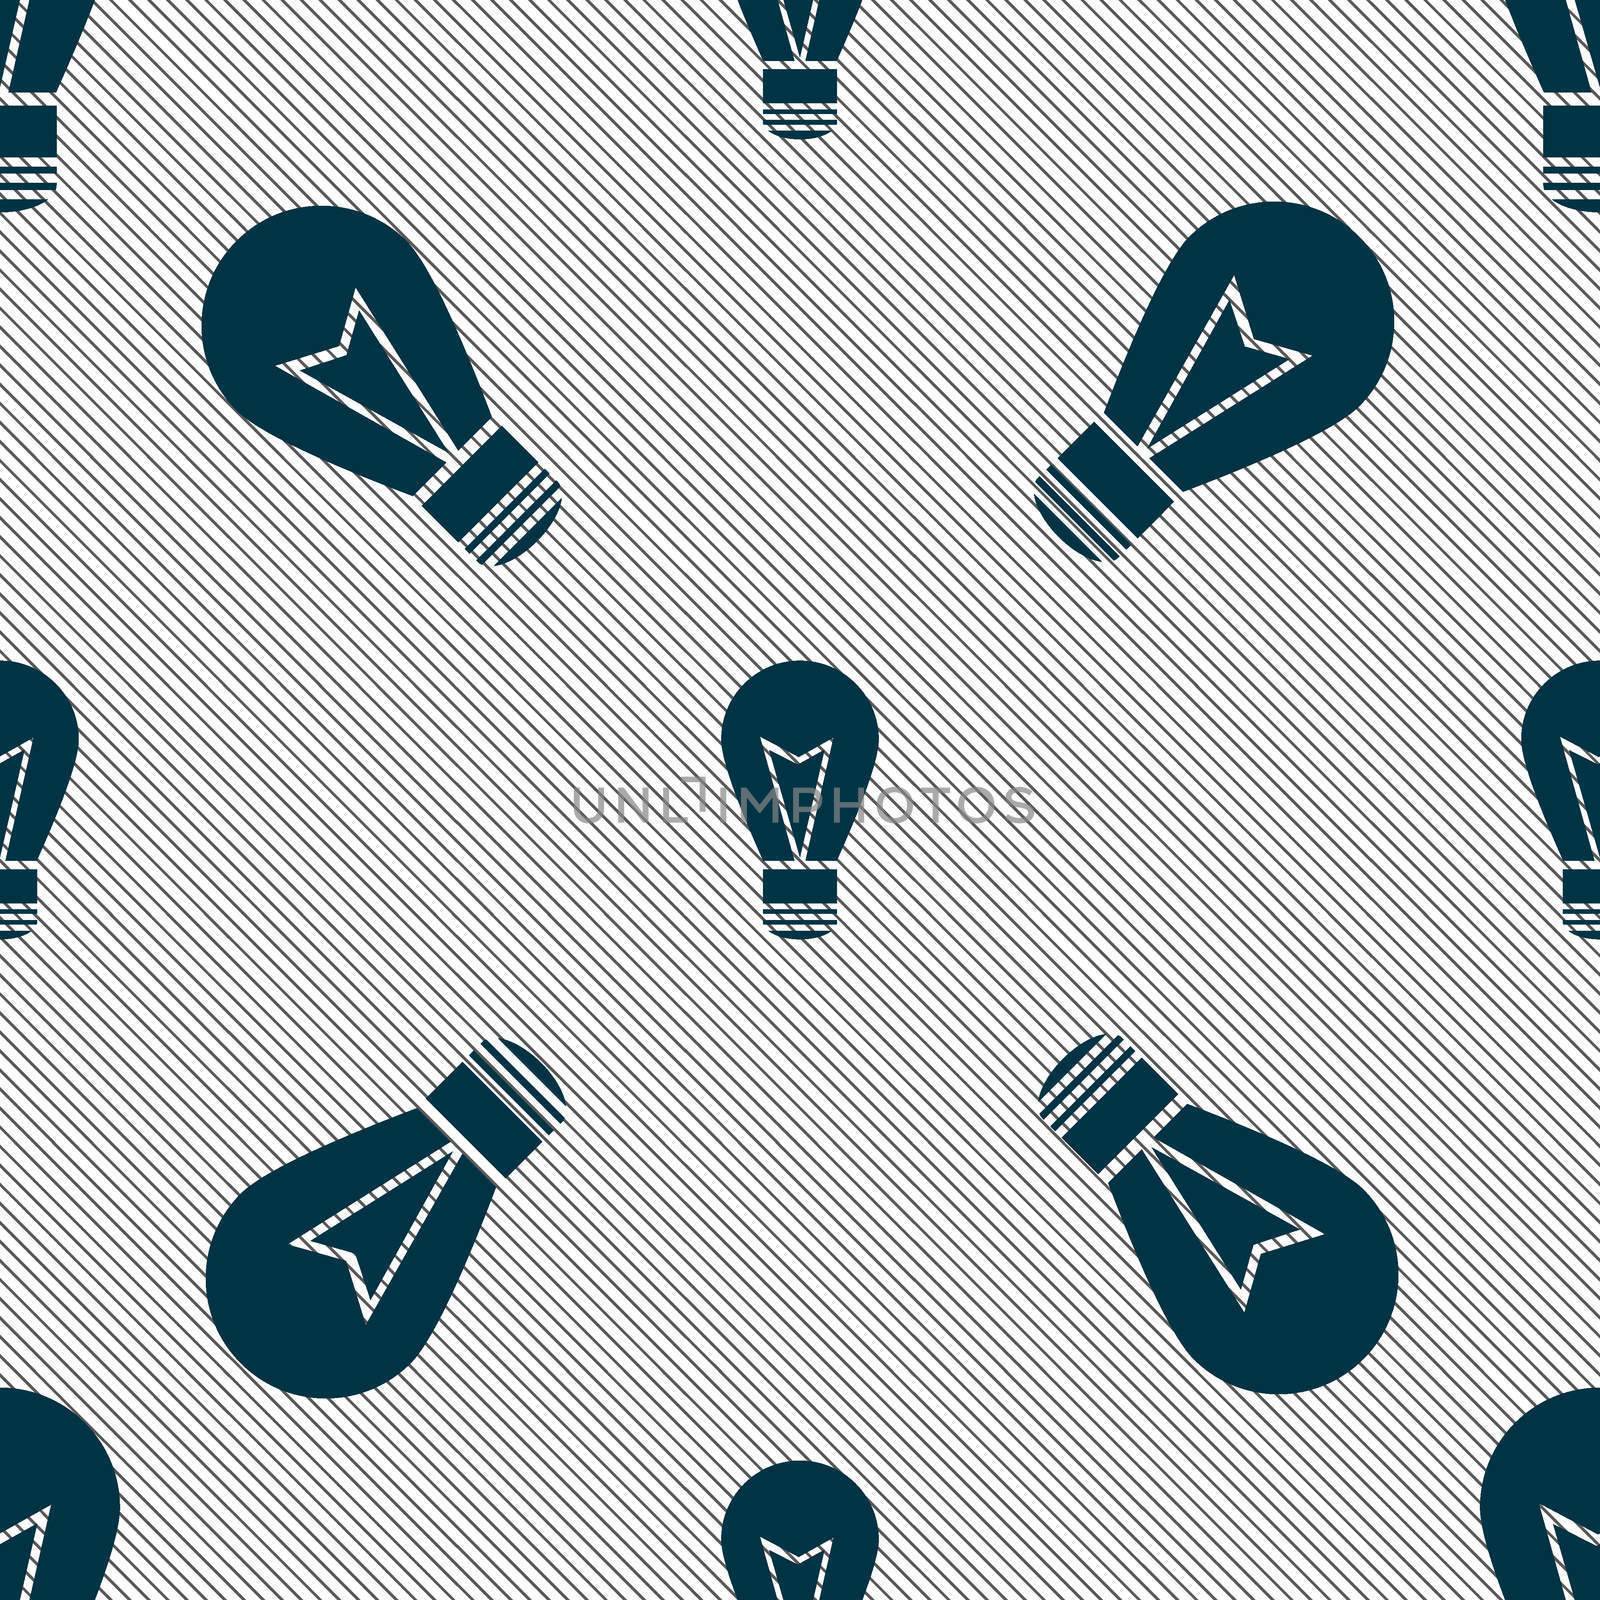 Light lamp sign icon. Idea symbol. Lightis on. Seamless pattern with geometric texture.  by serhii_lohvyniuk